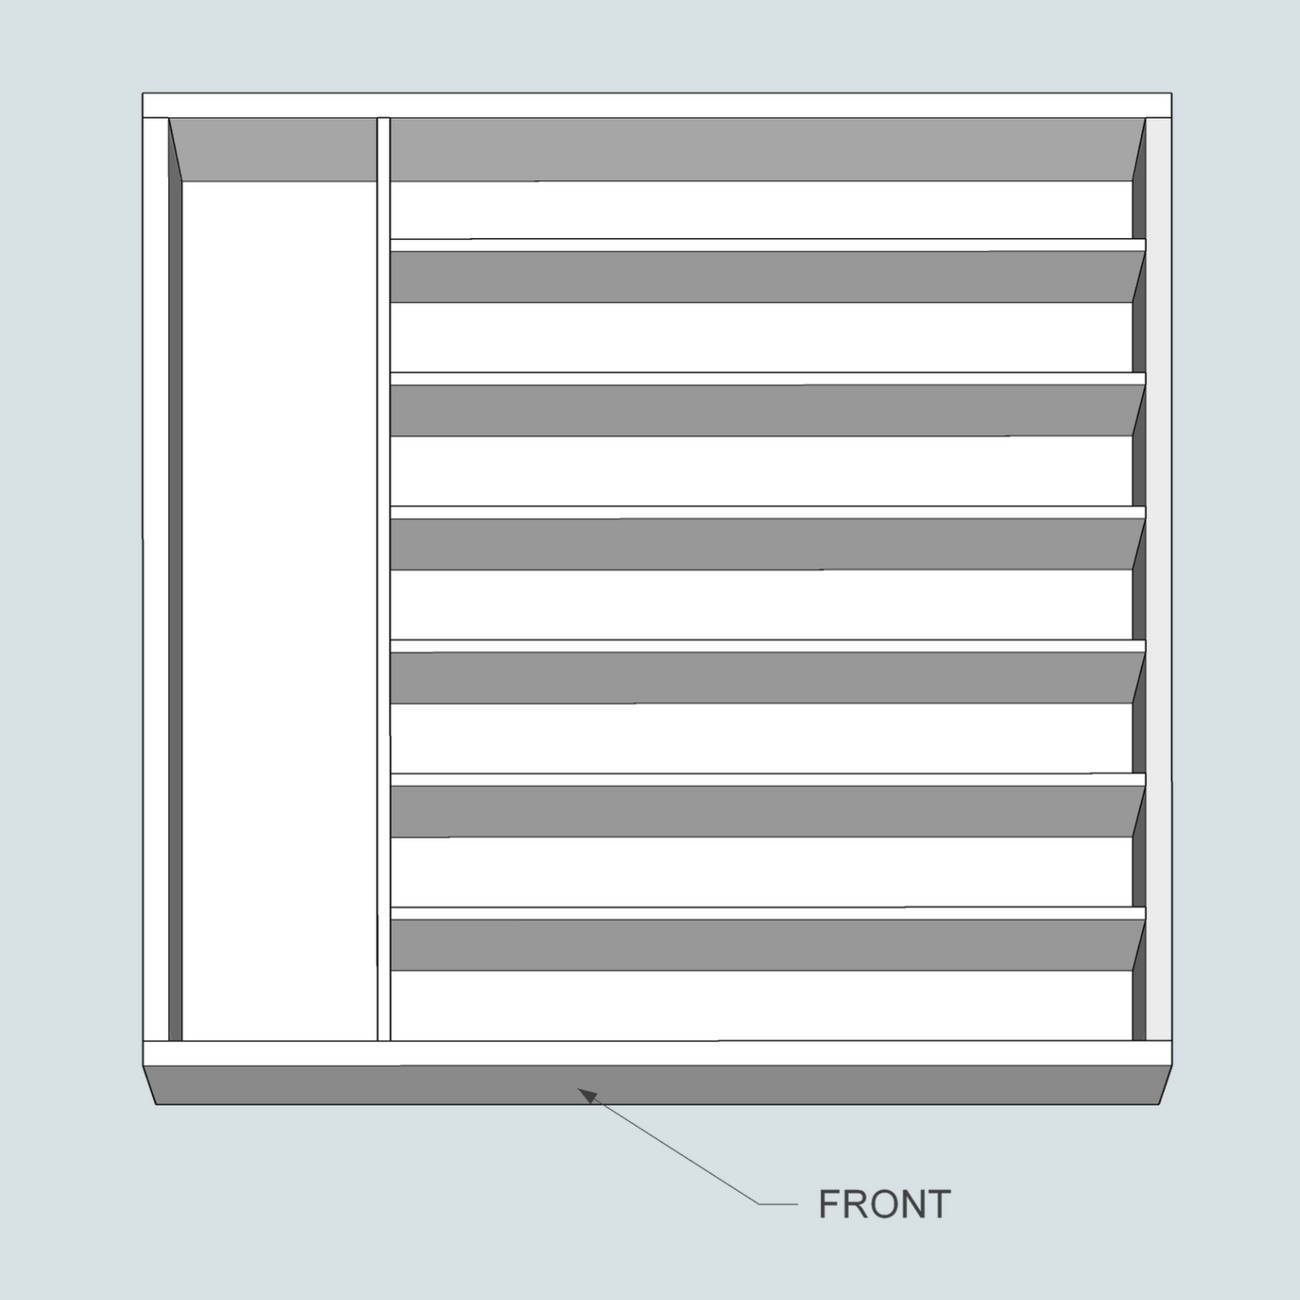 Engineering Drawings for Doors and Windows